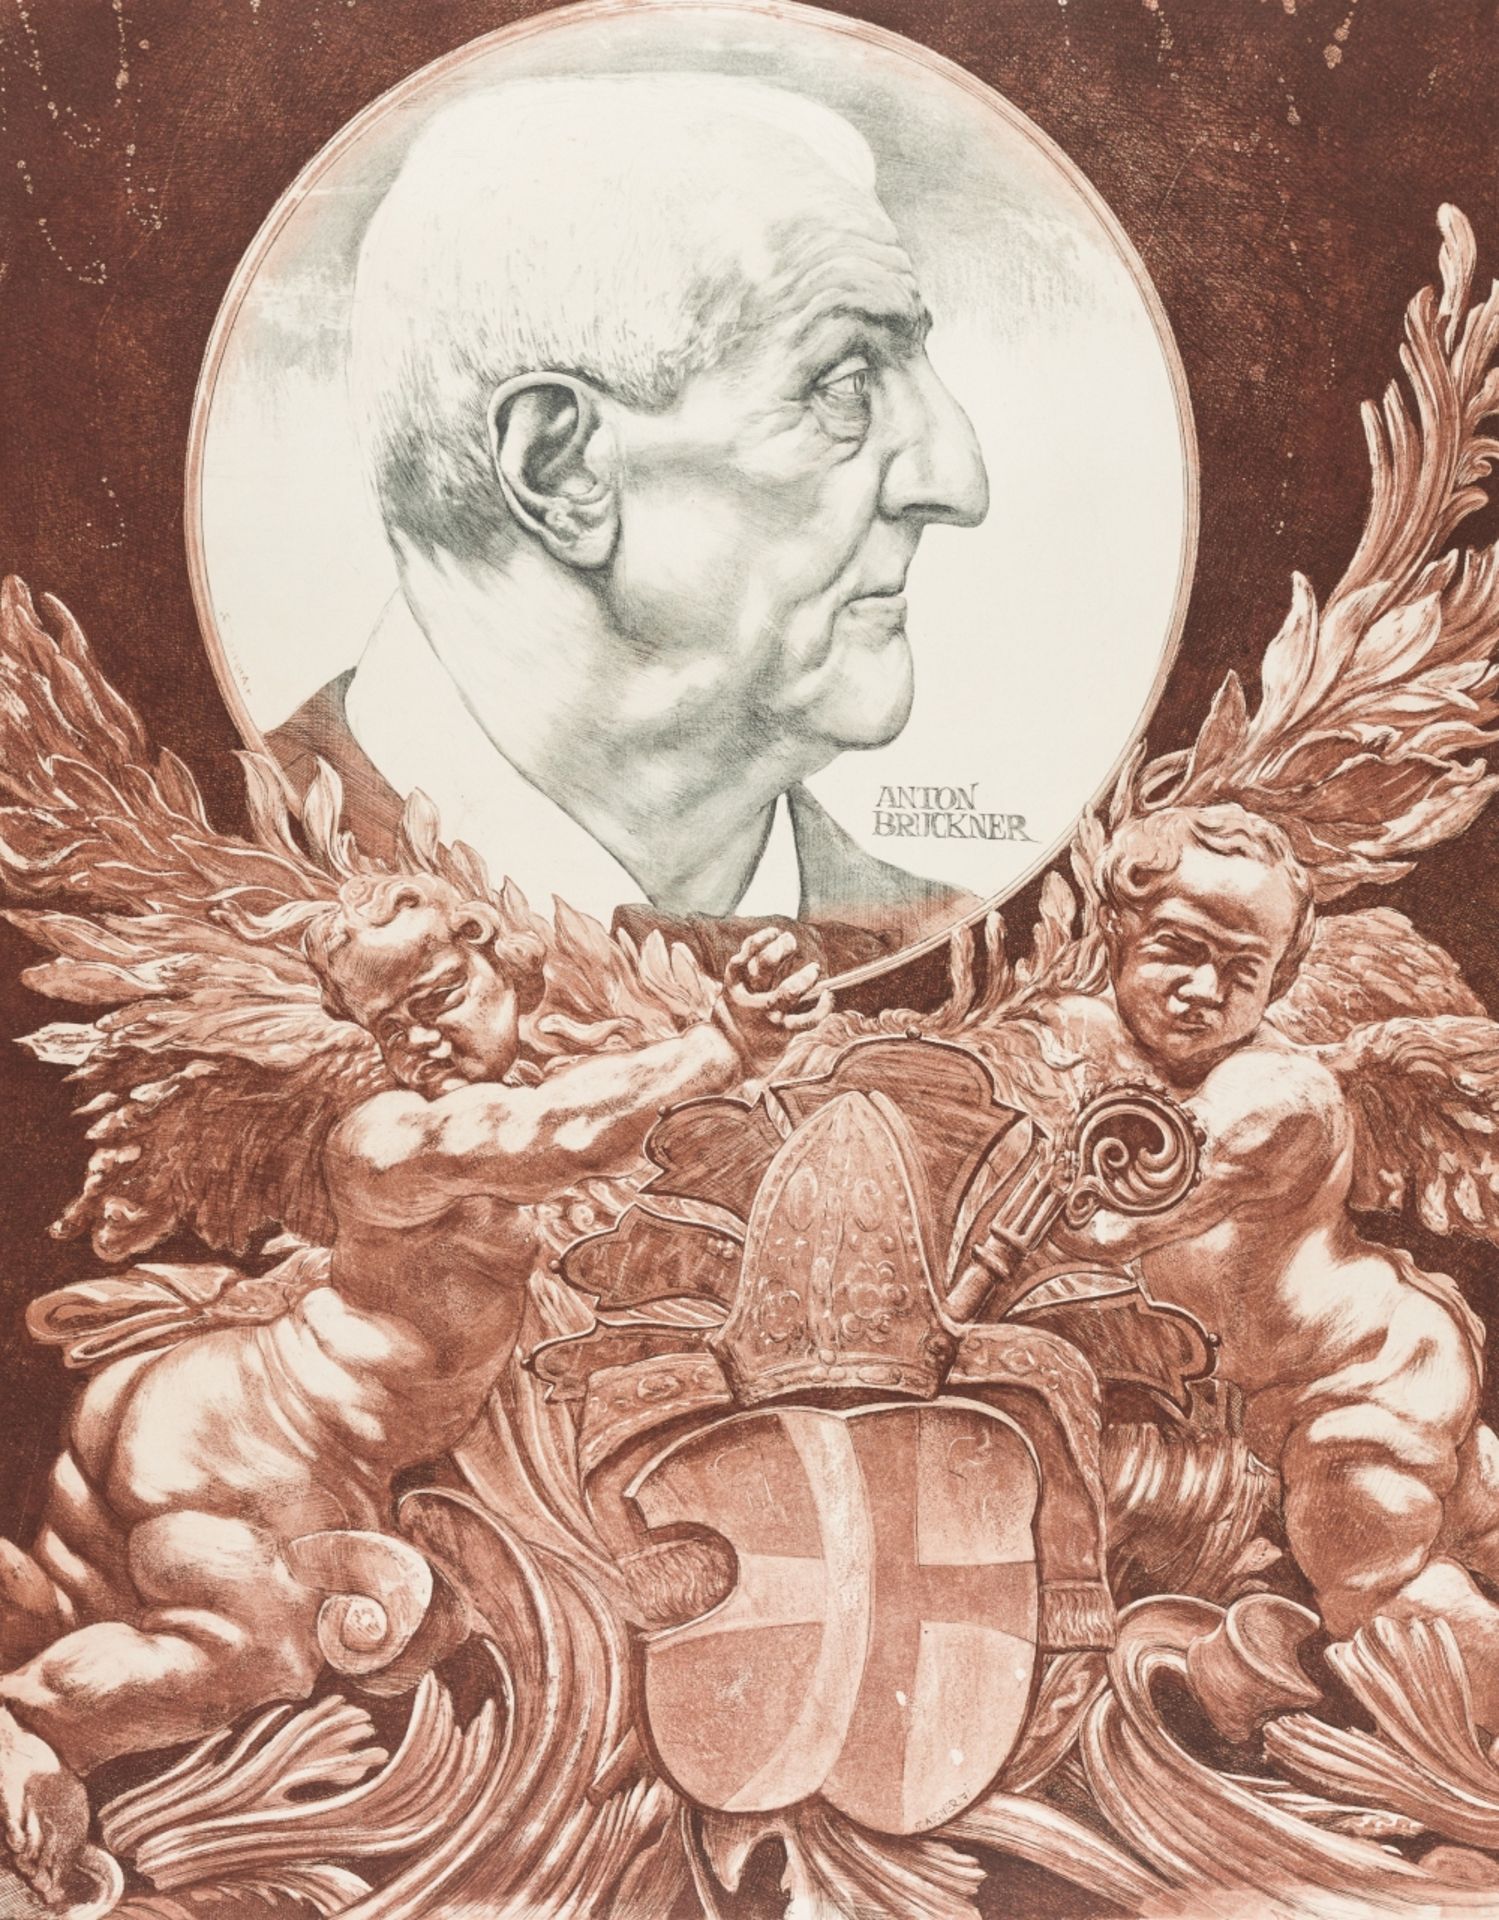 Aigner, Fritz(1930 - 2005)Anton Bruckner, (19)71Aquatint etching on copper plateSigned and dated